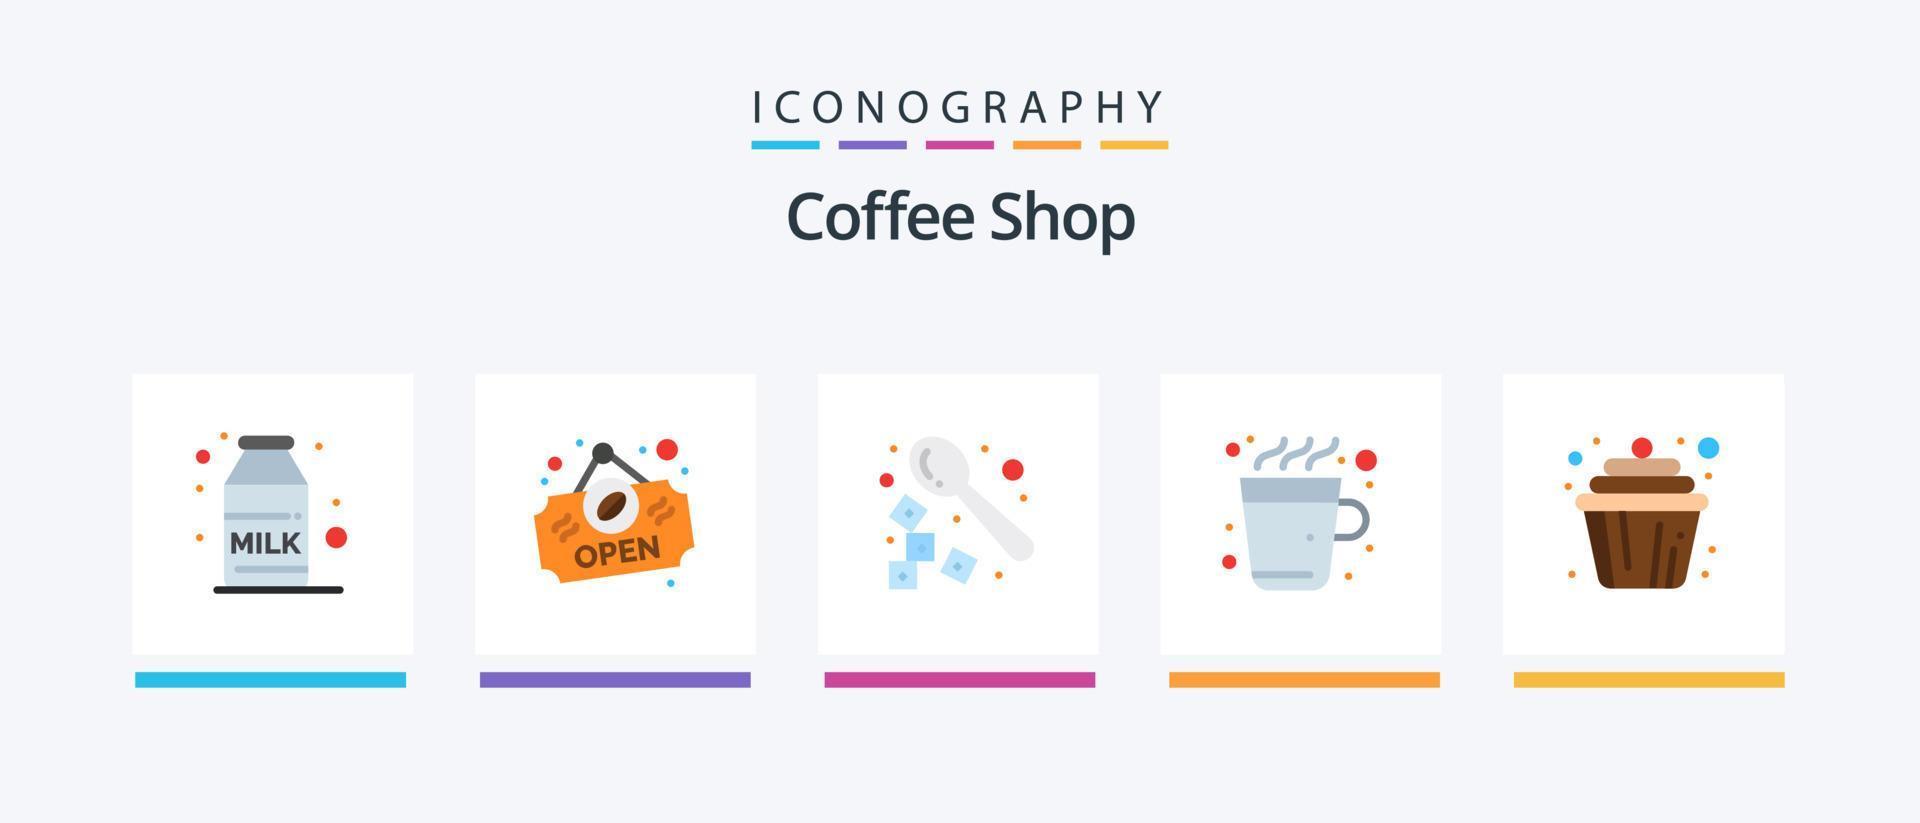 kaffe affär platt 5 ikon packa Inklusive muffin. kaka. dryck. cupcake. dryck. kreativ ikoner design vektor